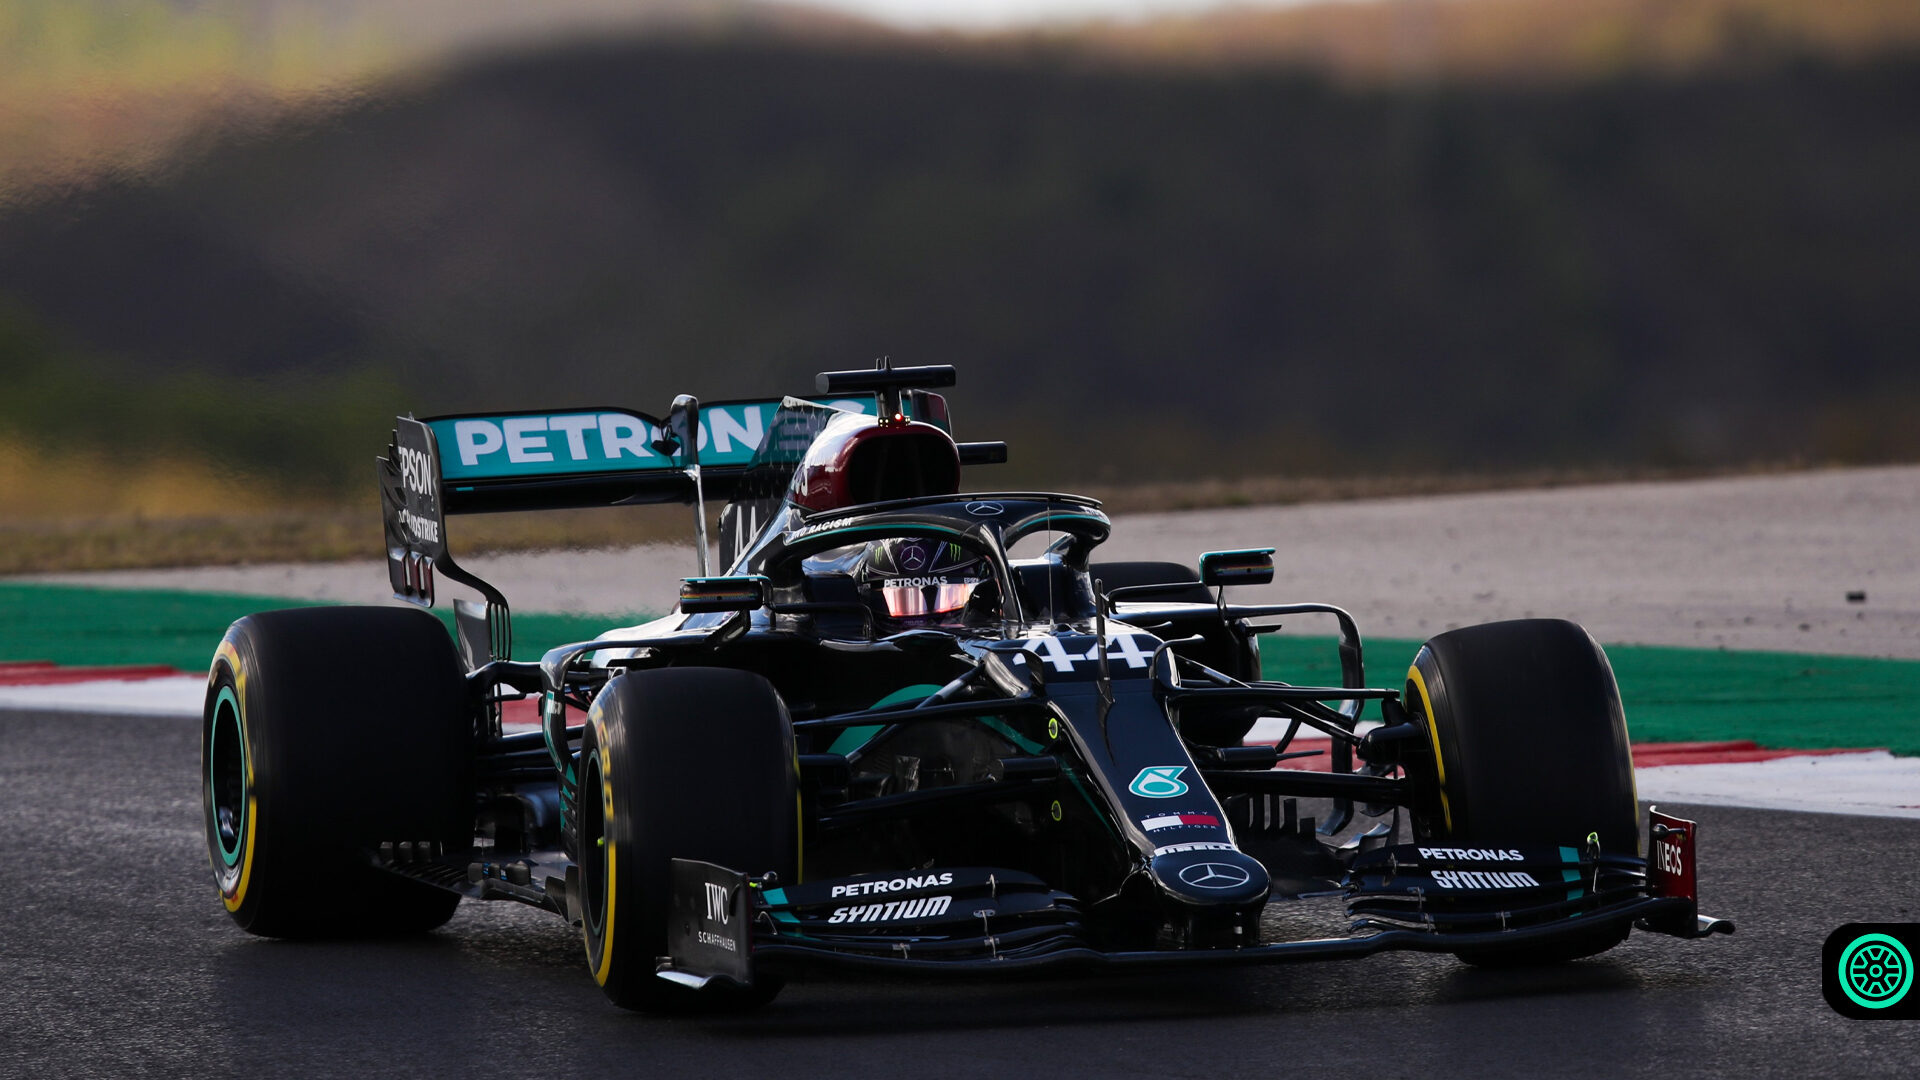 Lewis Hamilton 100 pol pozisyonu sahip ilk F1 pilotu oldu 1